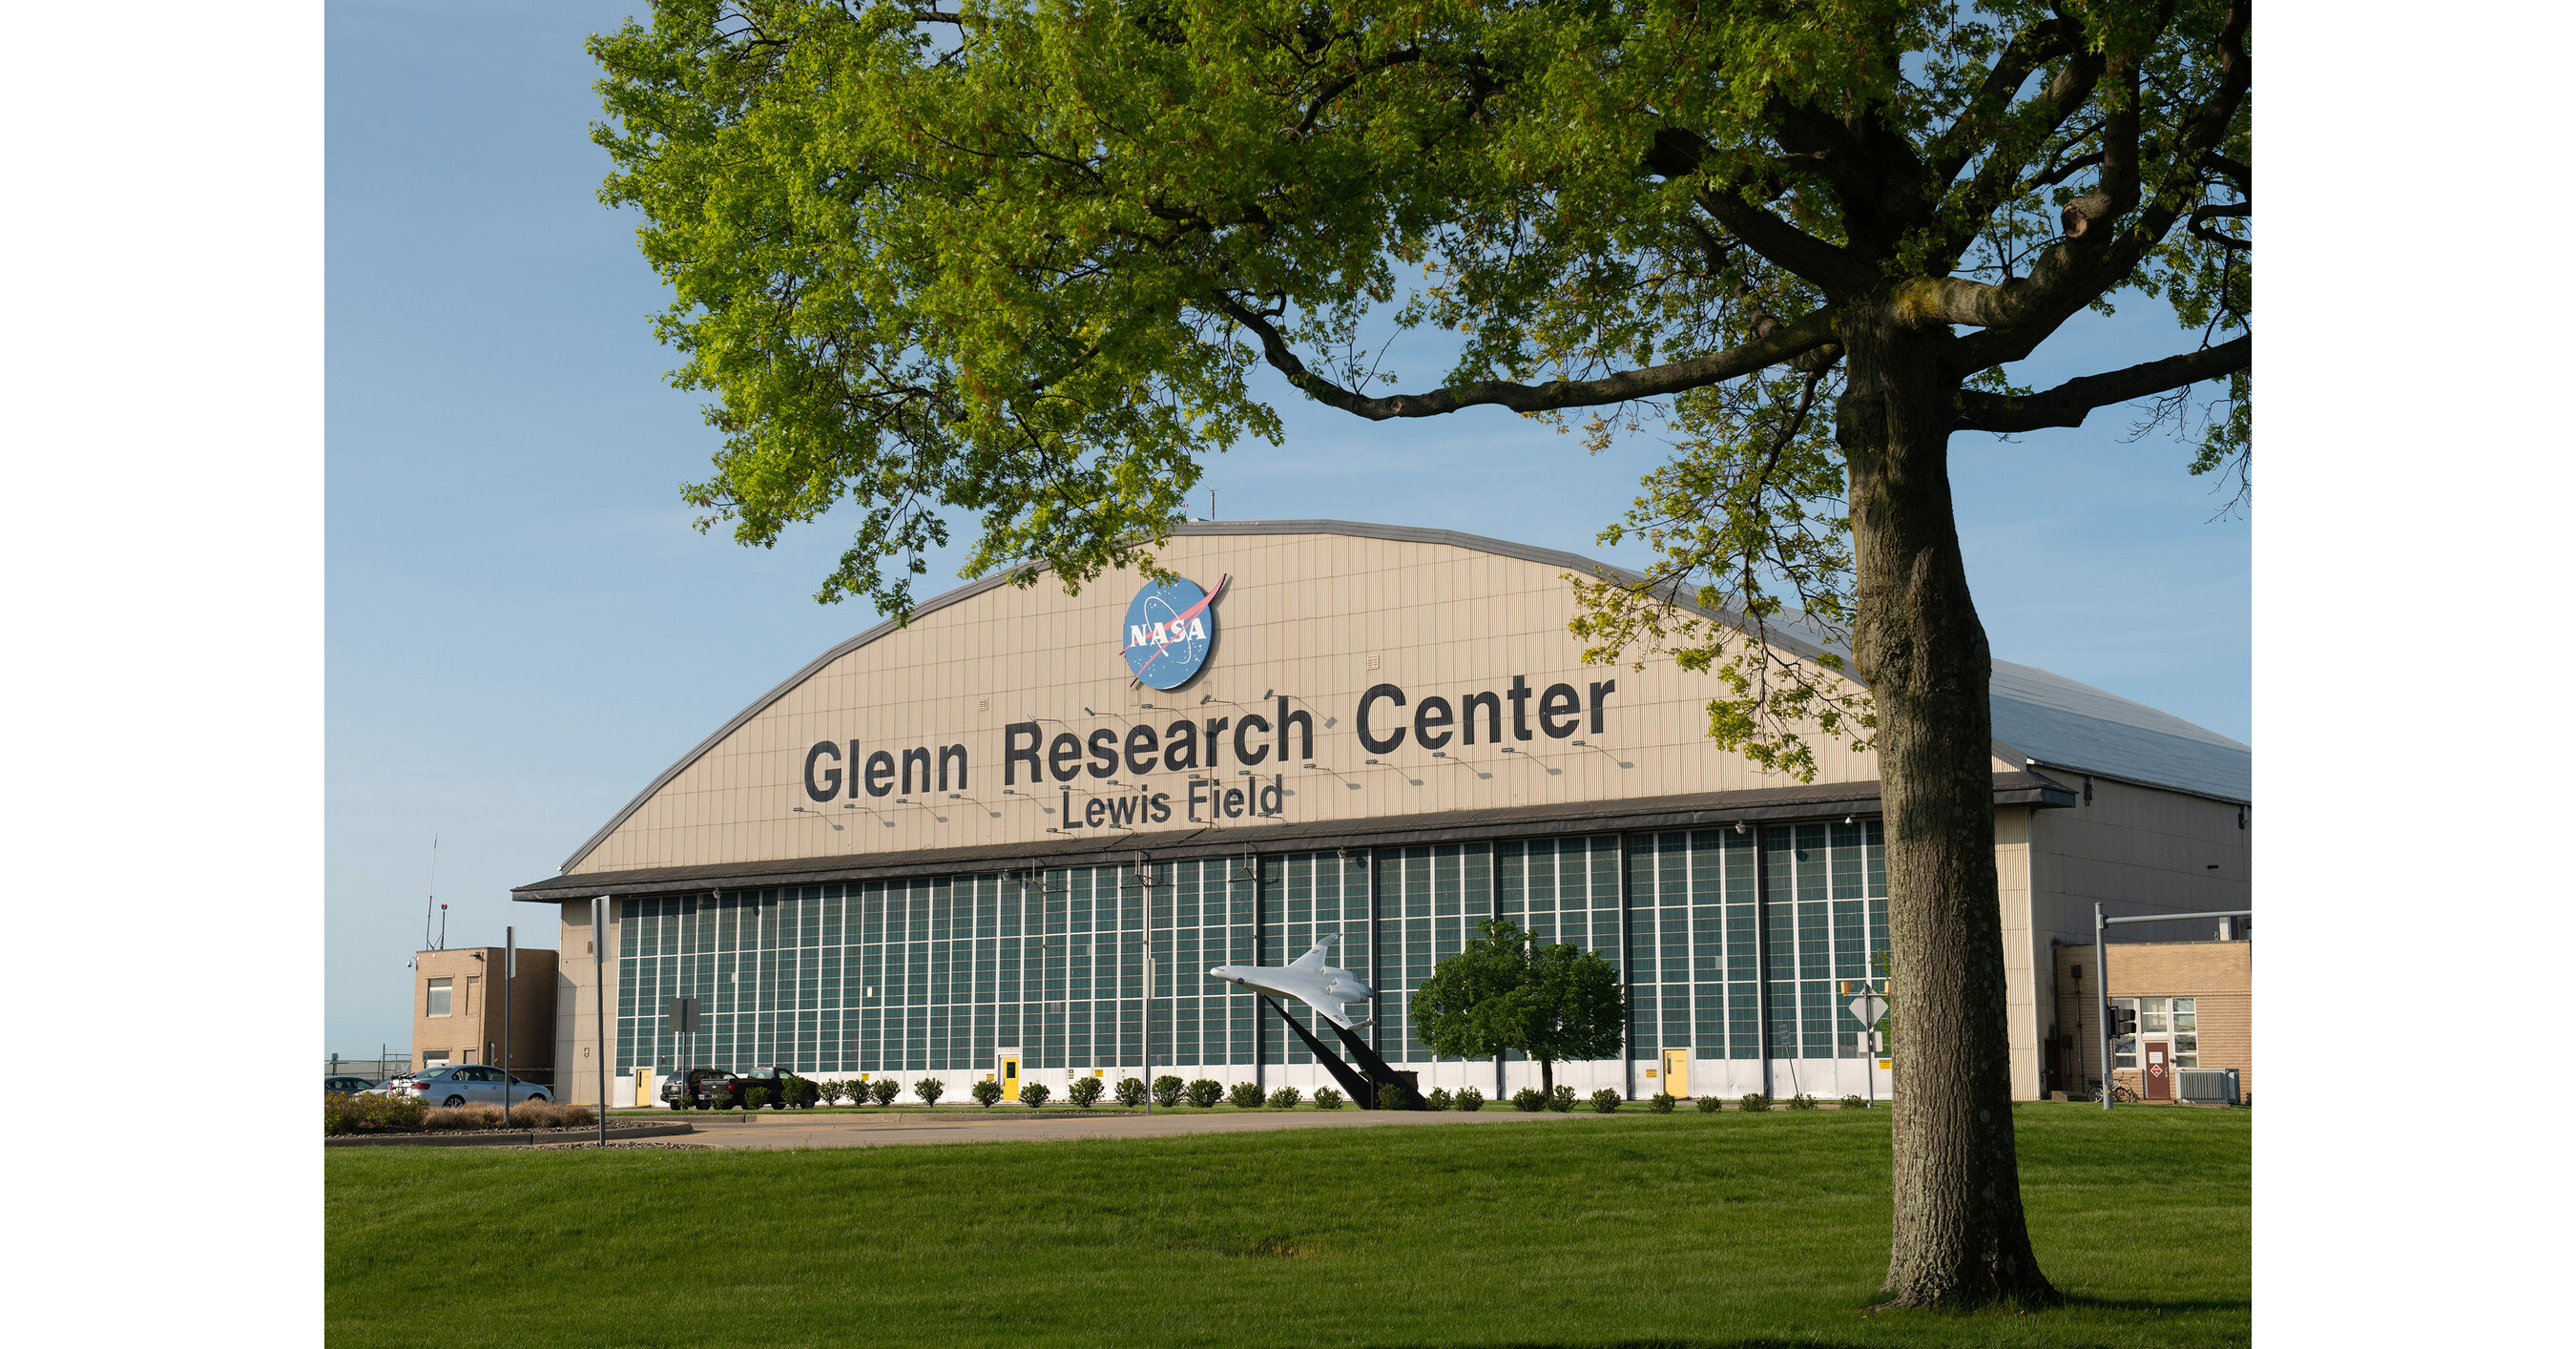 2022 nasa glenn research center entrance